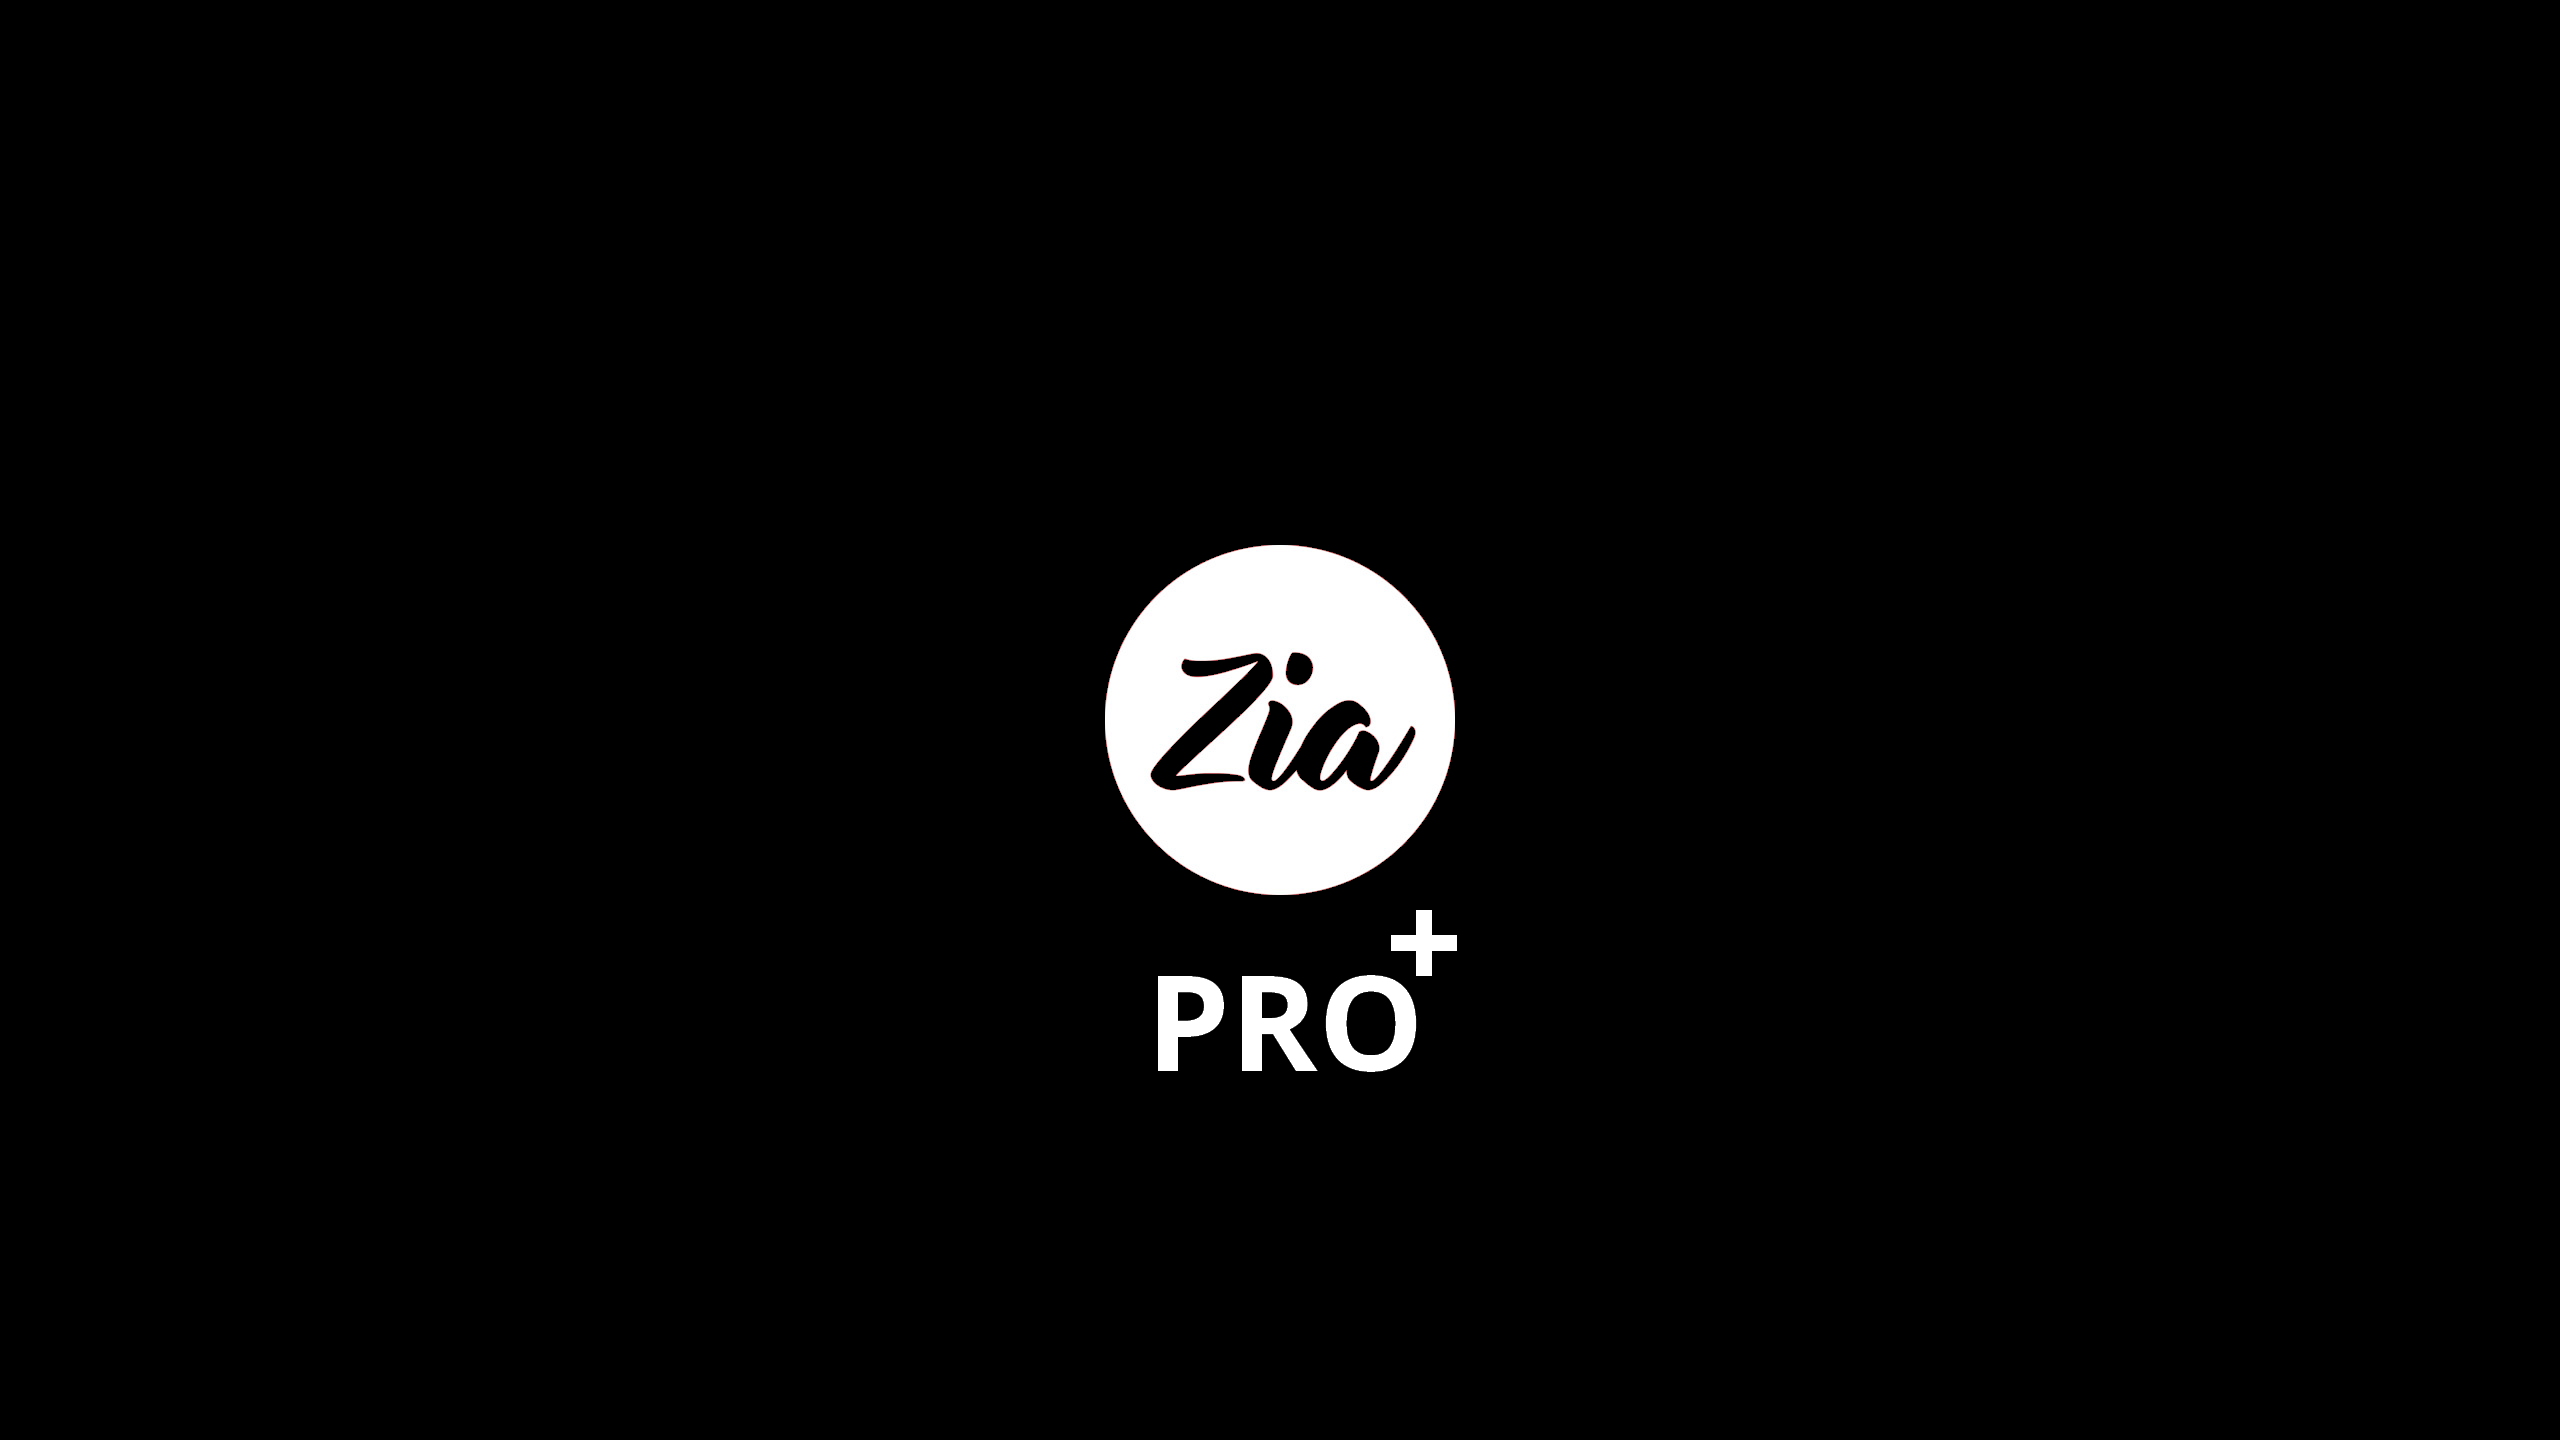 Zia Pro +